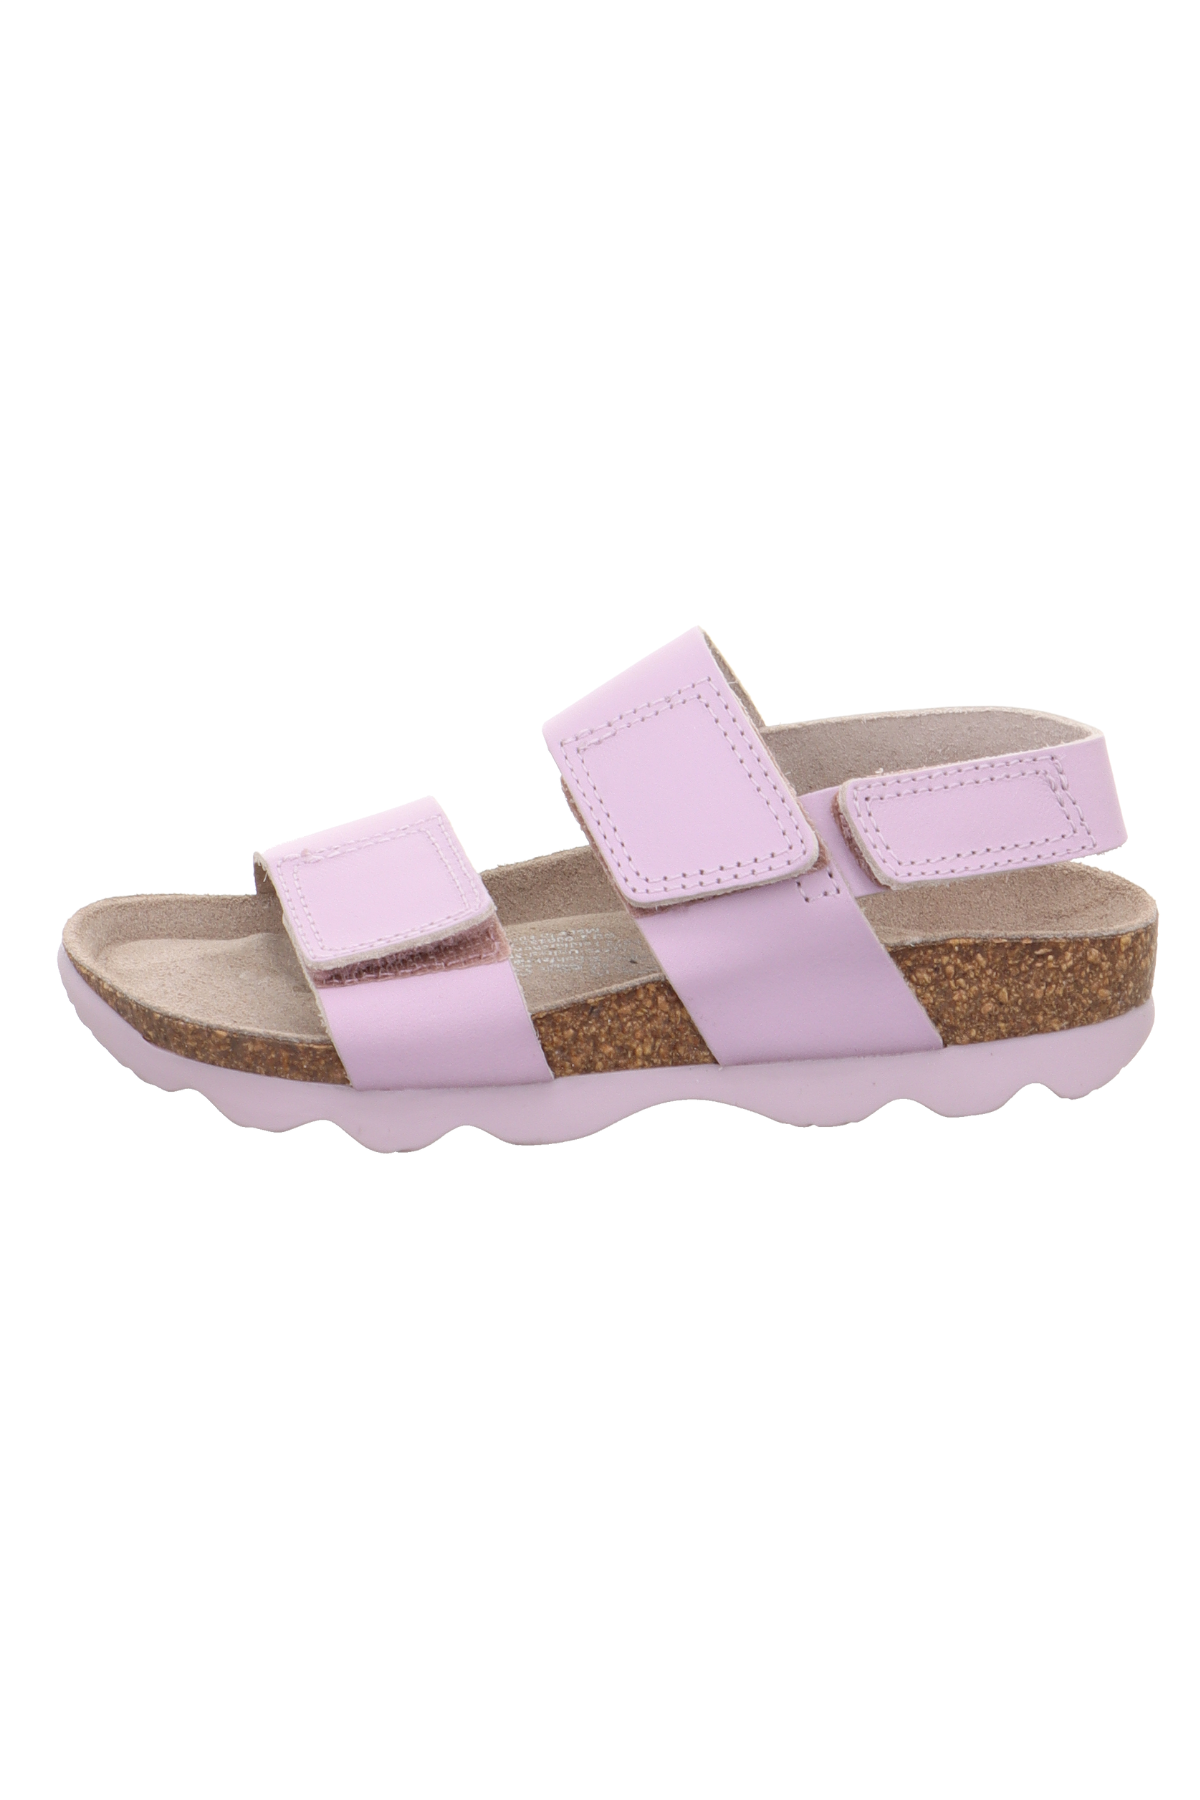 Superfit Jellies Kız Çocuk Lila Mantar Soft Tabanlı Sandalet 000133-8500